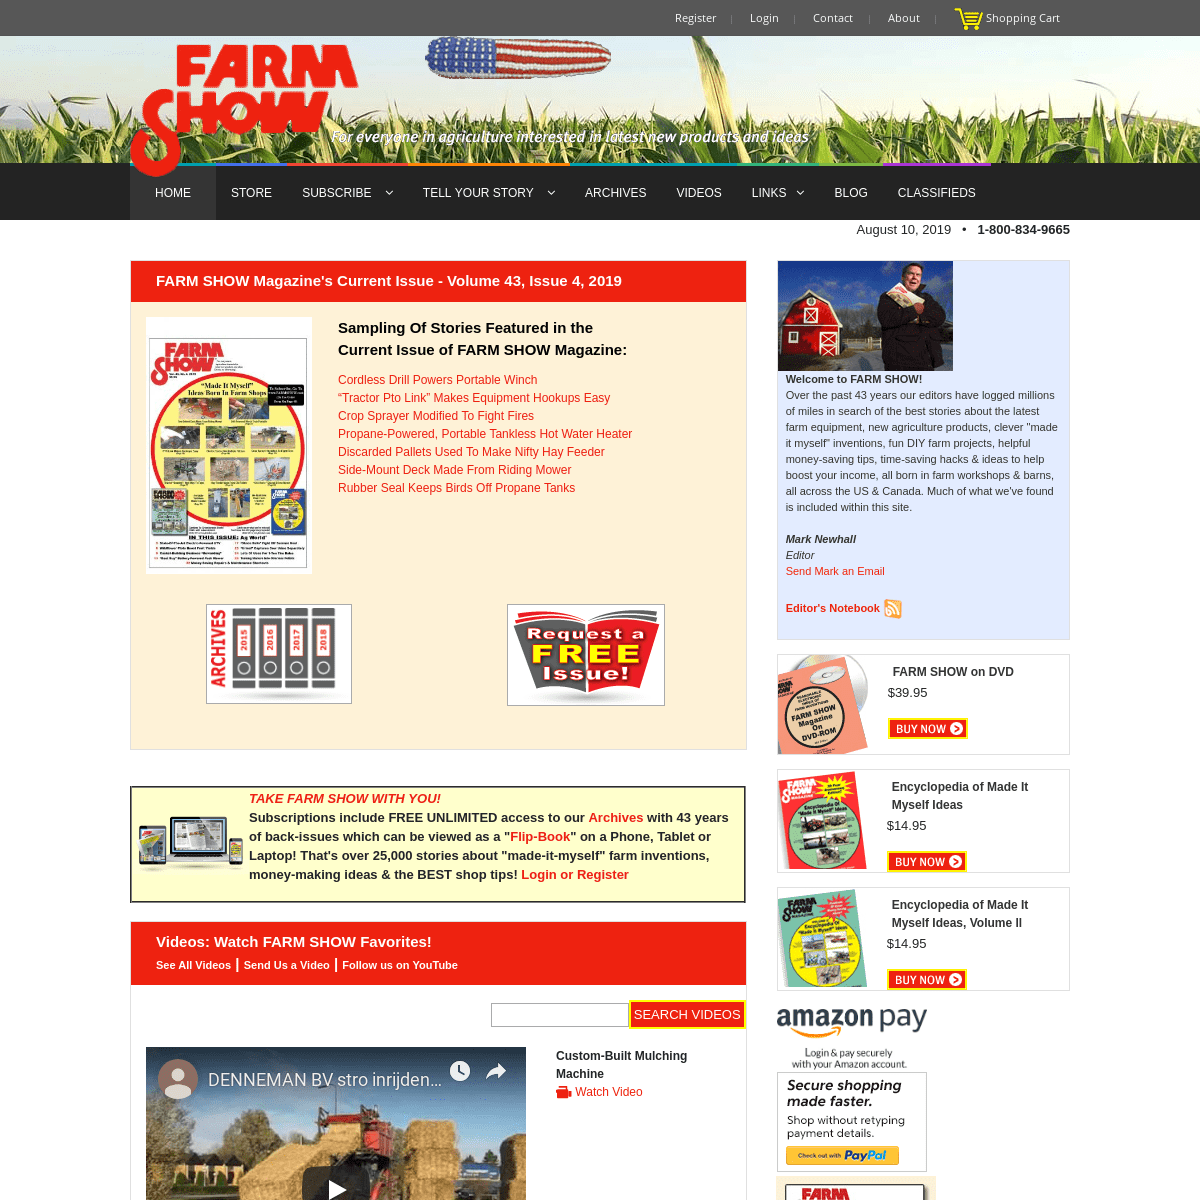 FARM SHOW Magazine - Farming, Ranching & Agriculture News, Clever Farm Shop Inventions, Ranch & Farming Tips, Time-savin